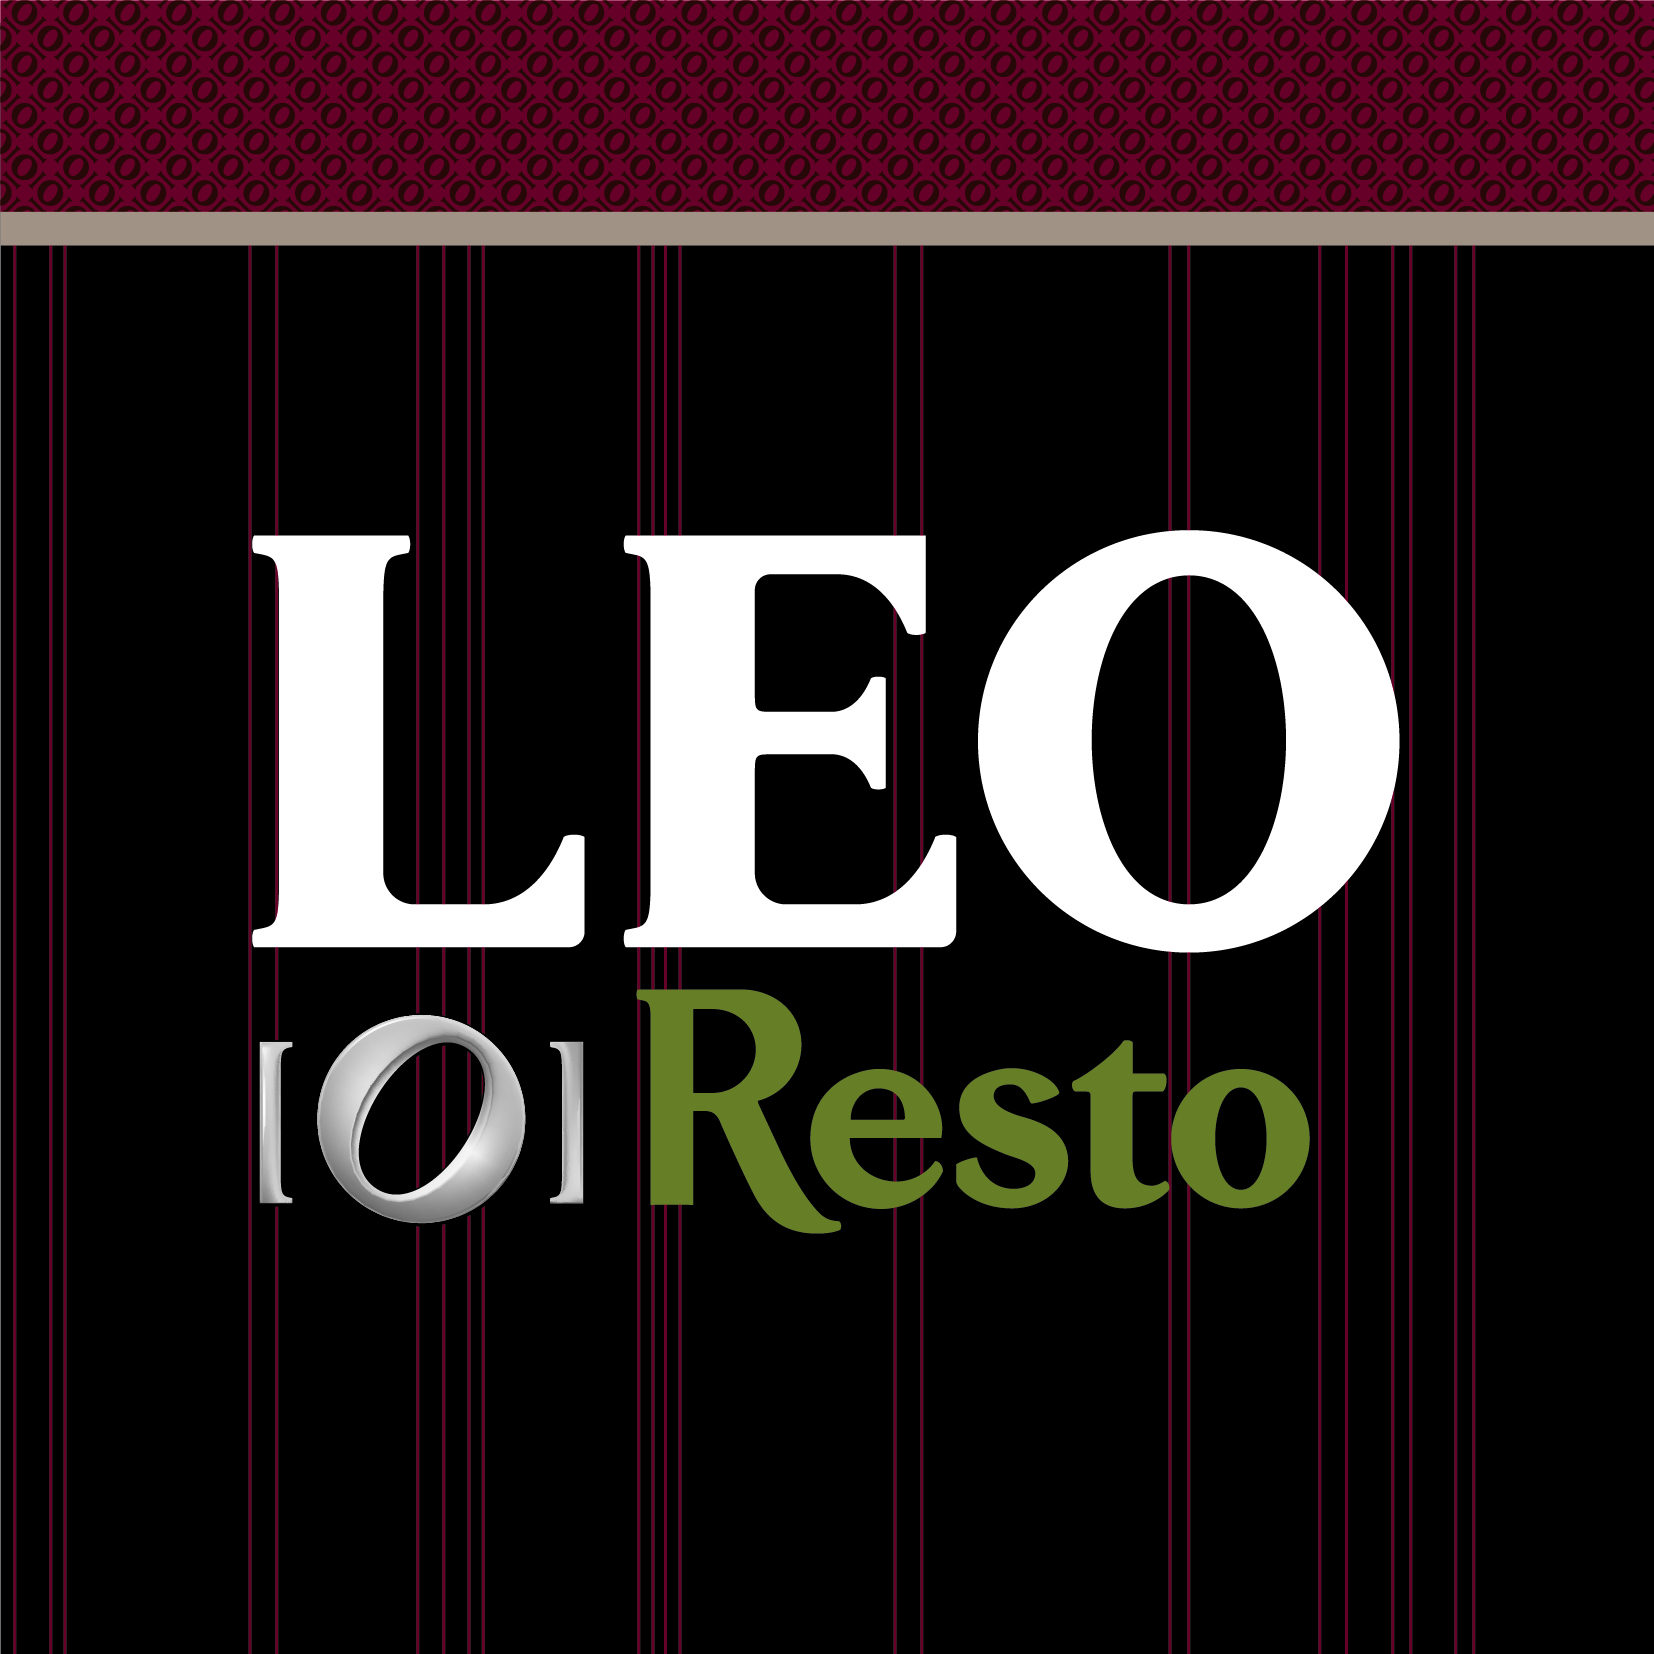 Leo Resto